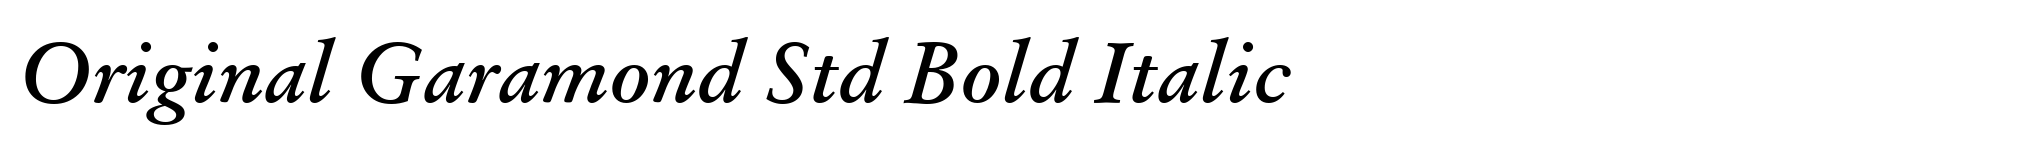 Original Garamond Std Bold Italic image